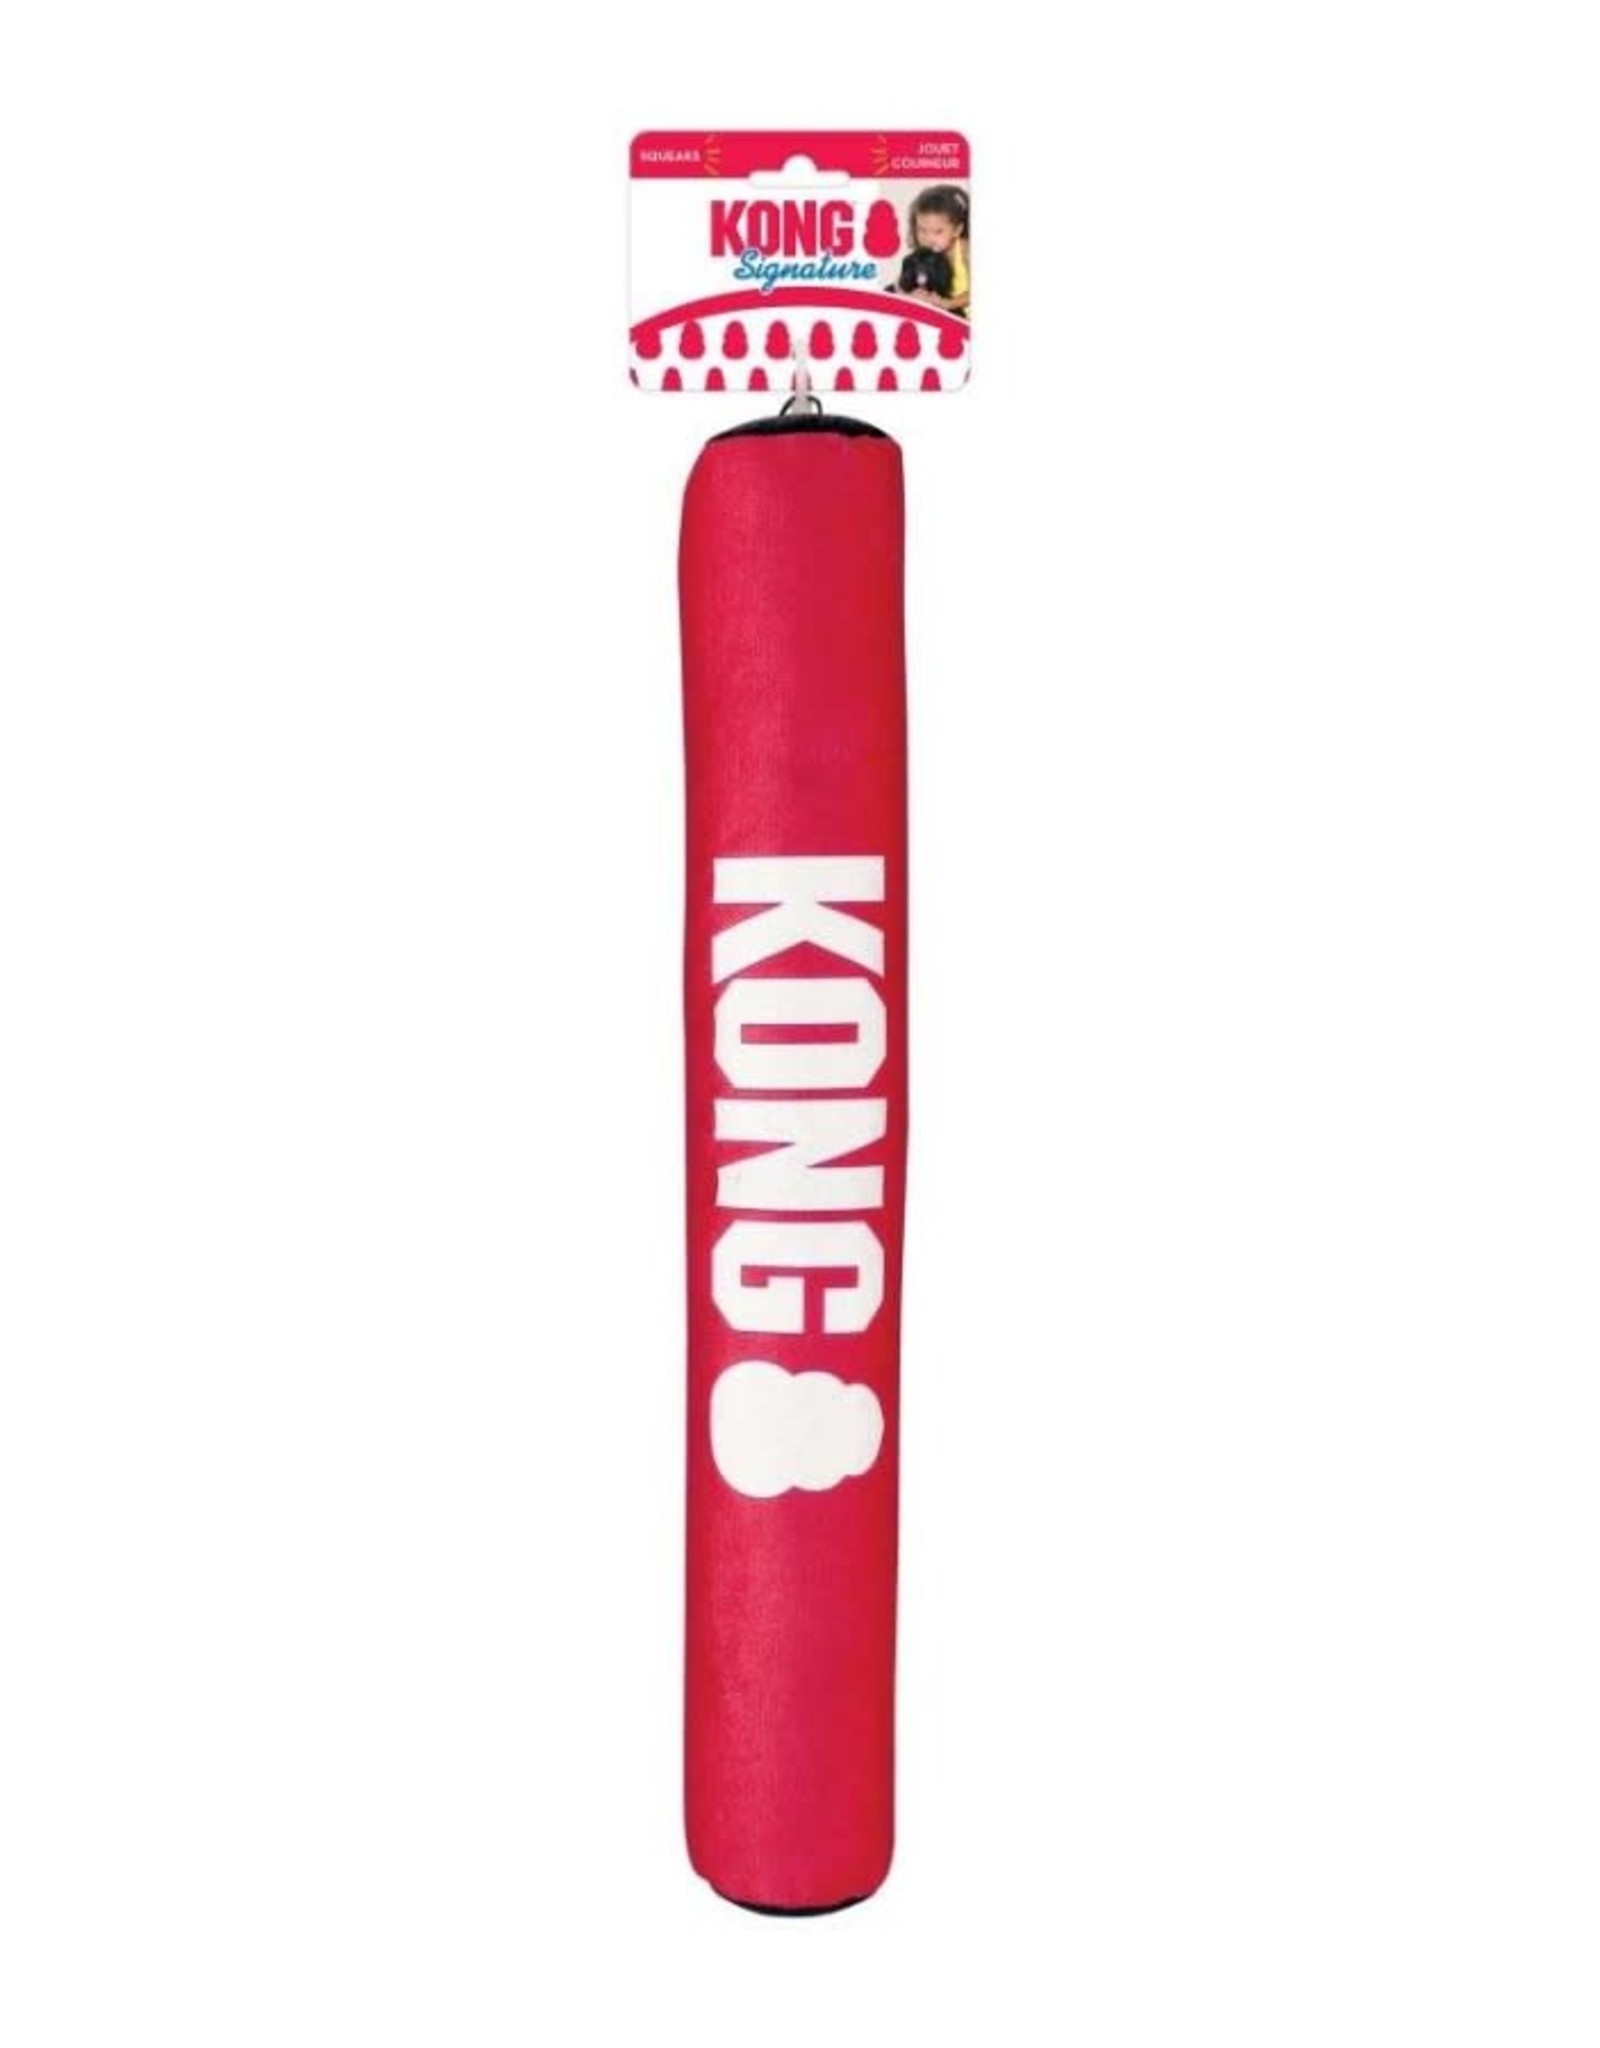 KONG COMPANY KONG Signature Stick Dog Toy Large